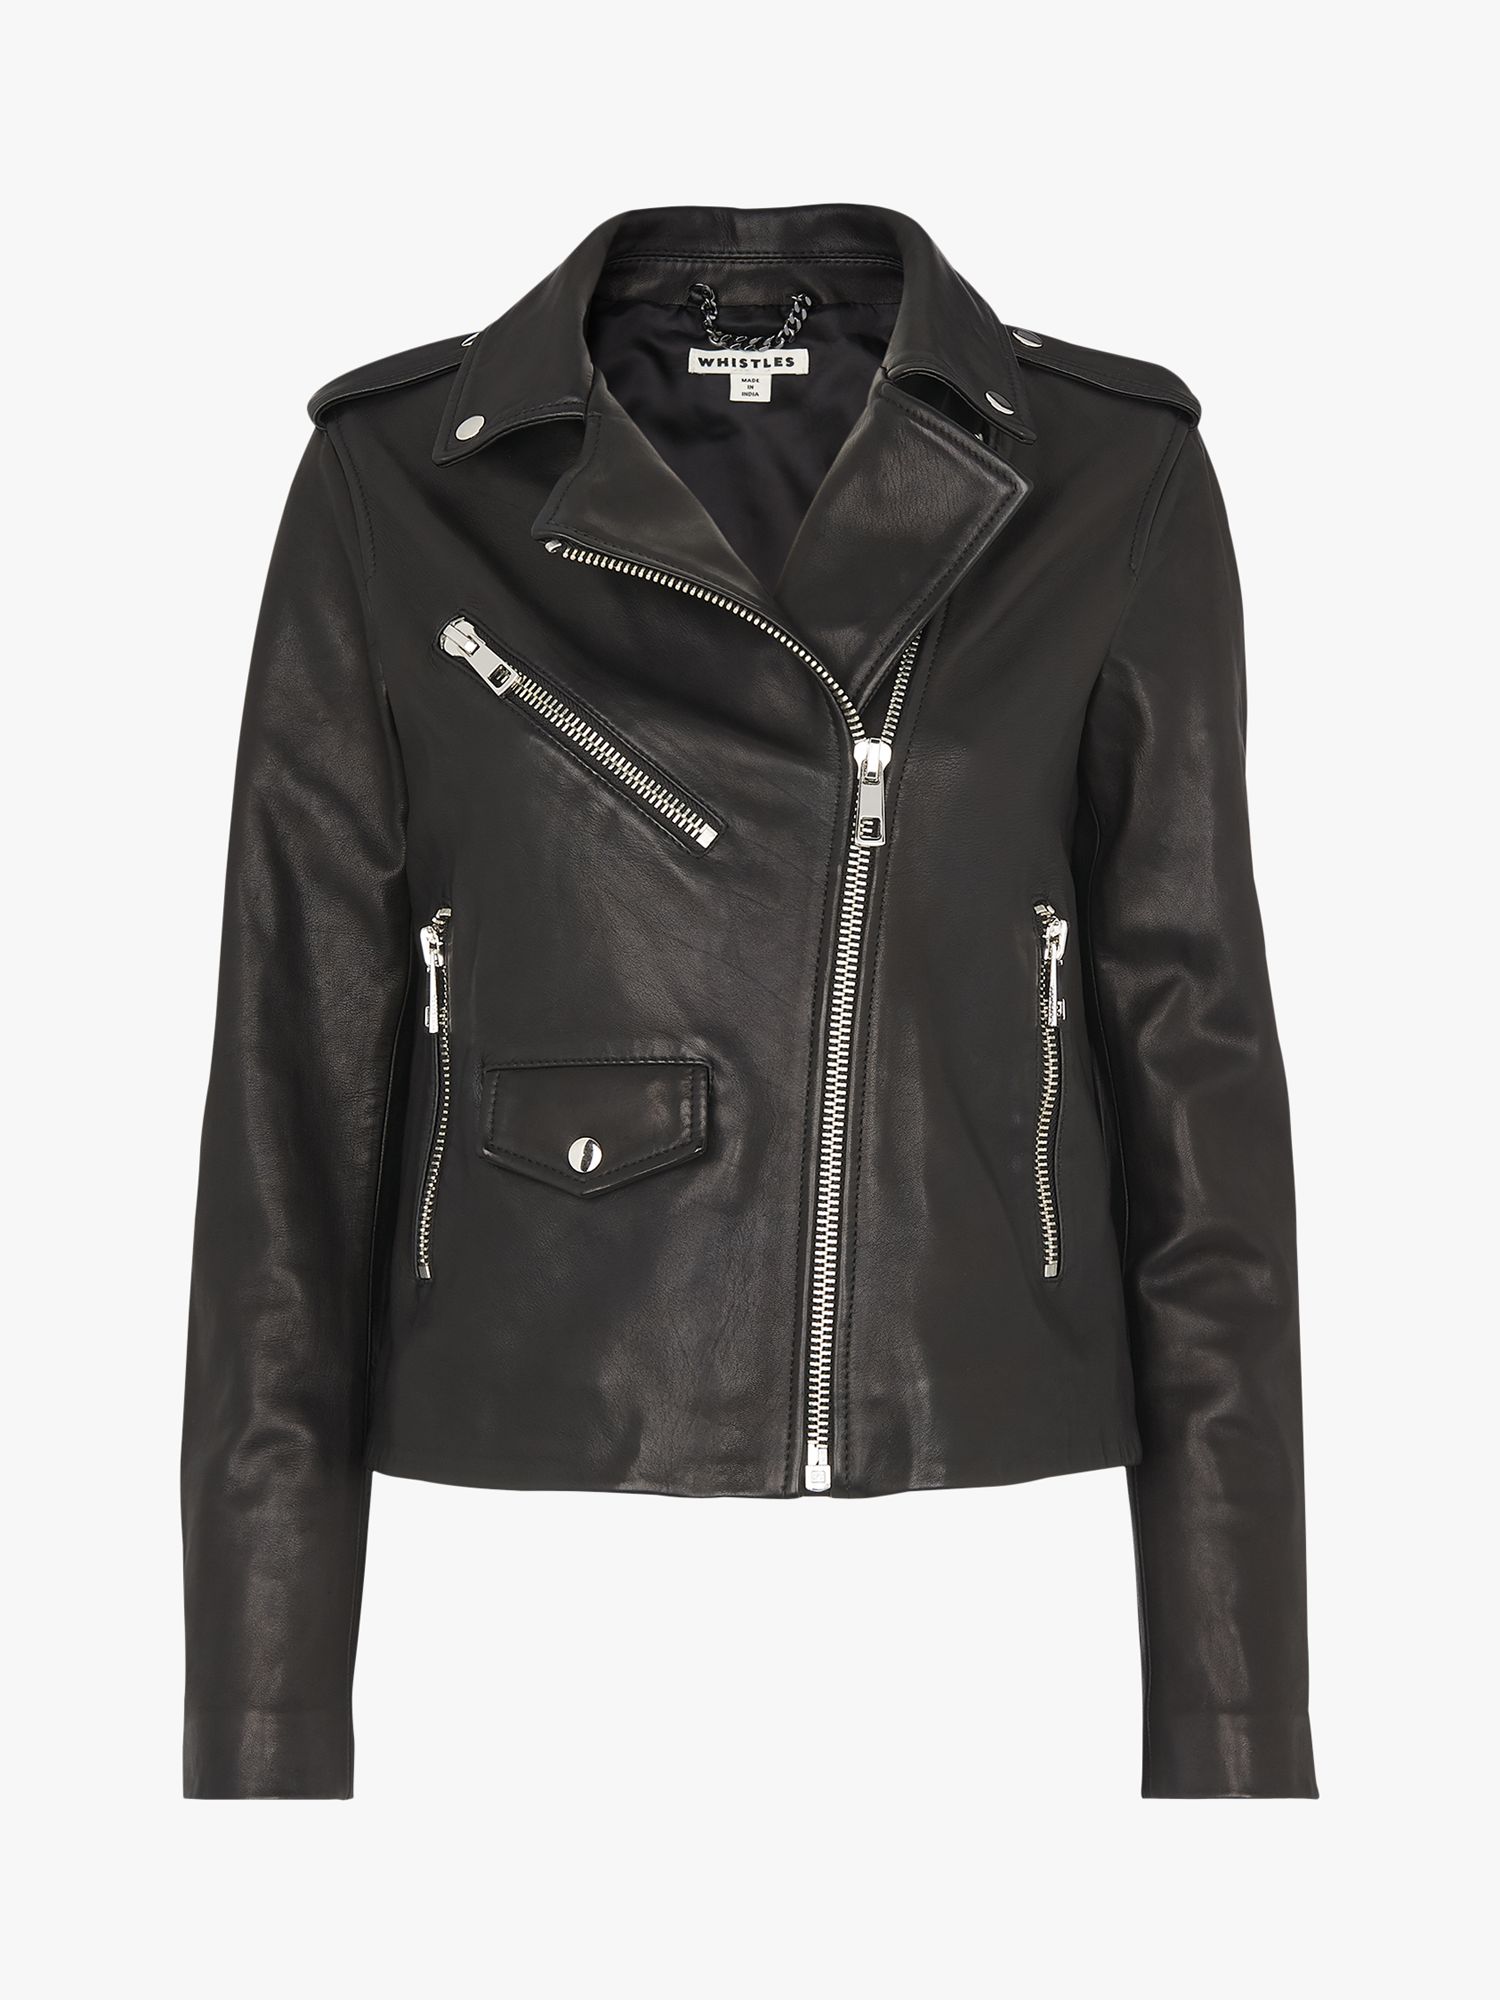 Whistles Agnes Leather Biker Jacket, Black at John Lewis & Partners